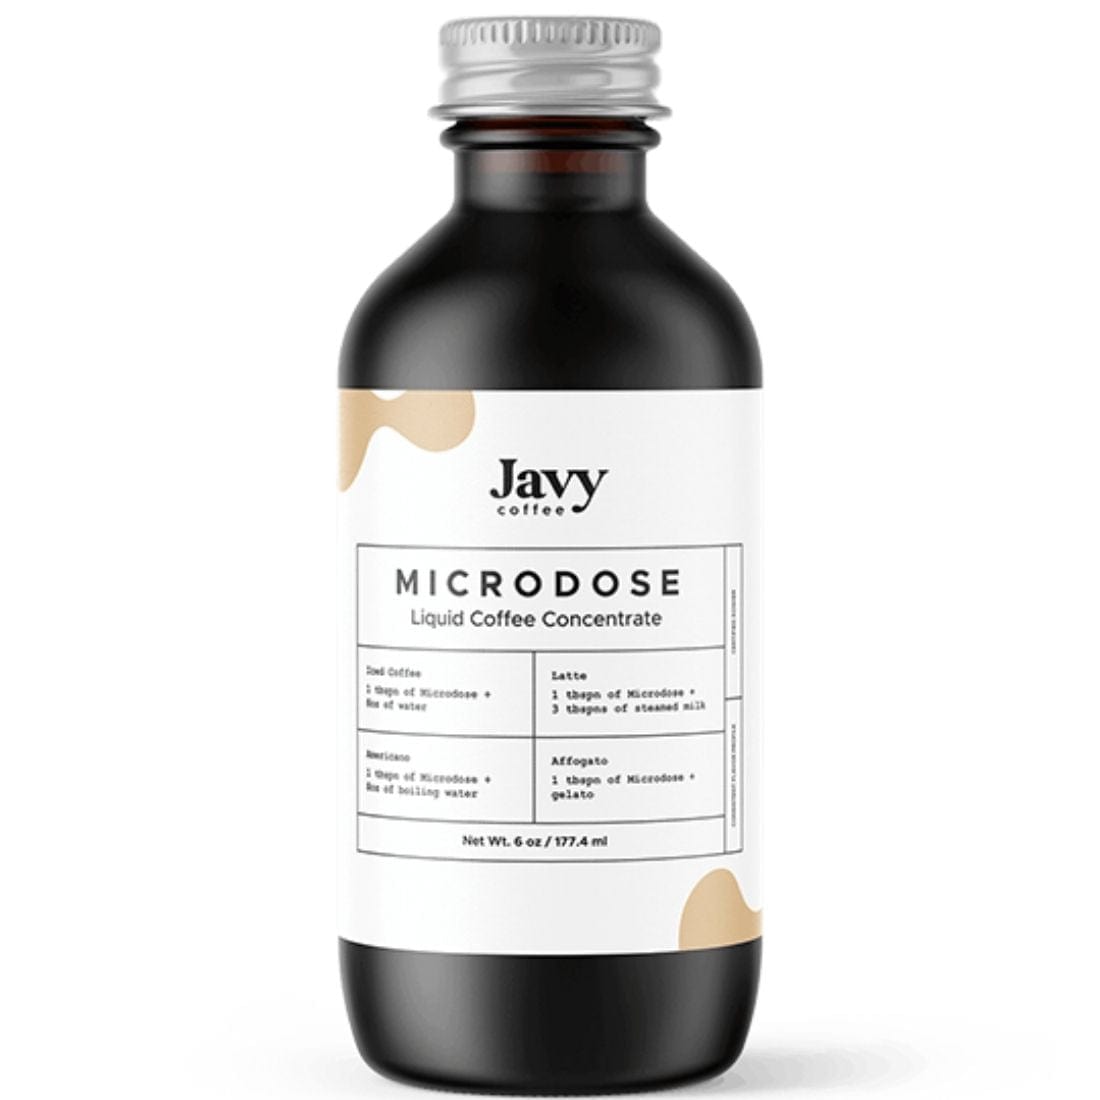 Javy Microdose - Liquid Coffee Concentrate